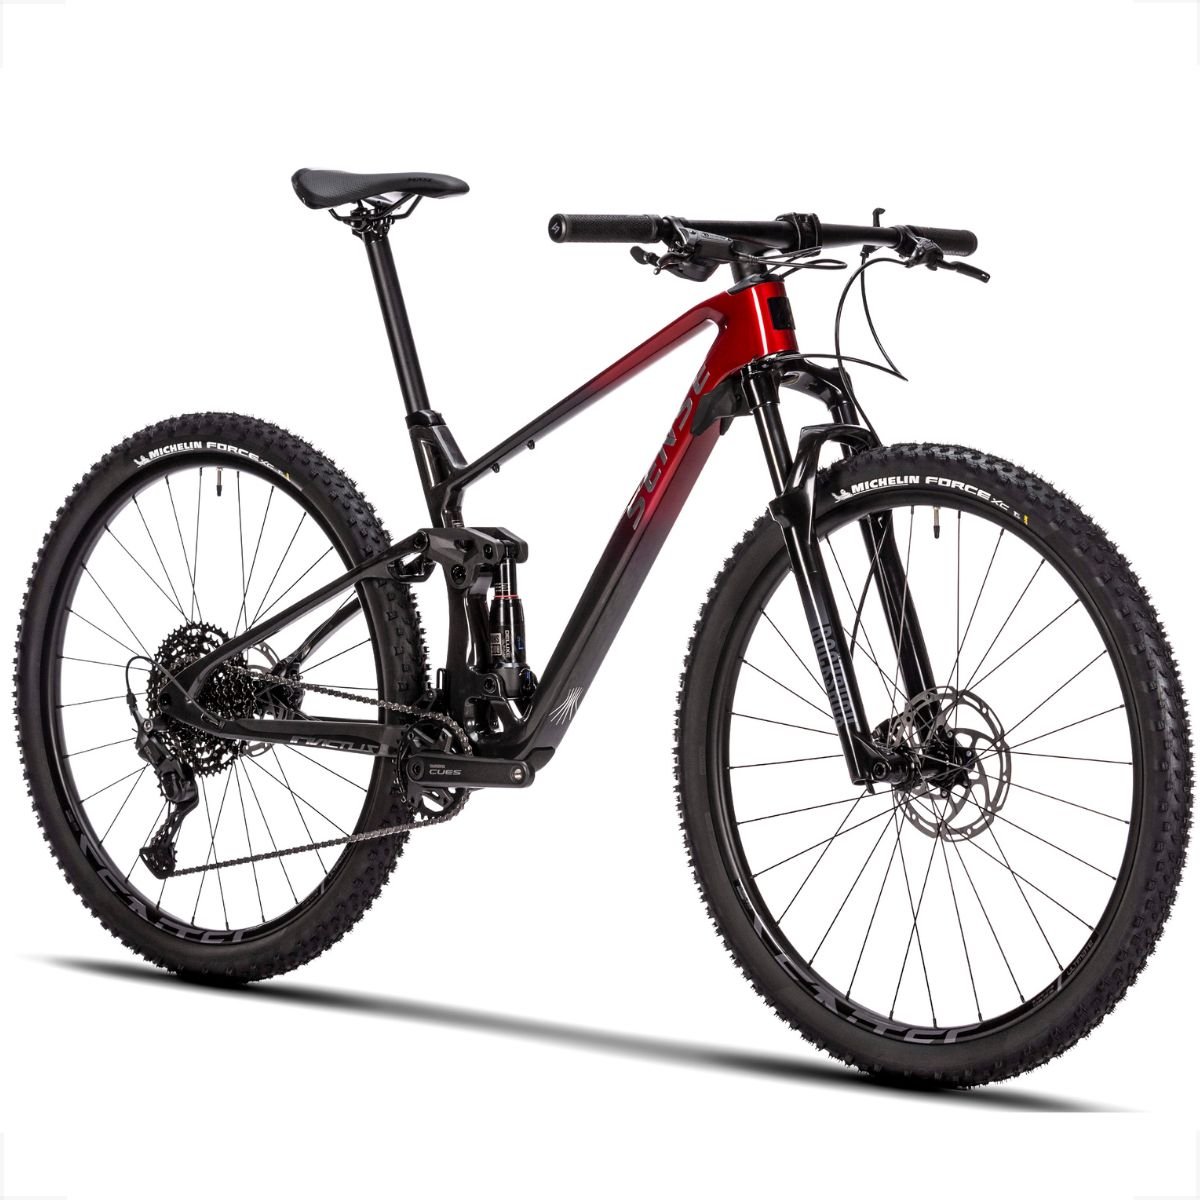 Bicicleta Full Sense Invictus Sport Carbono Shimano Cues:vermelho+preto/15